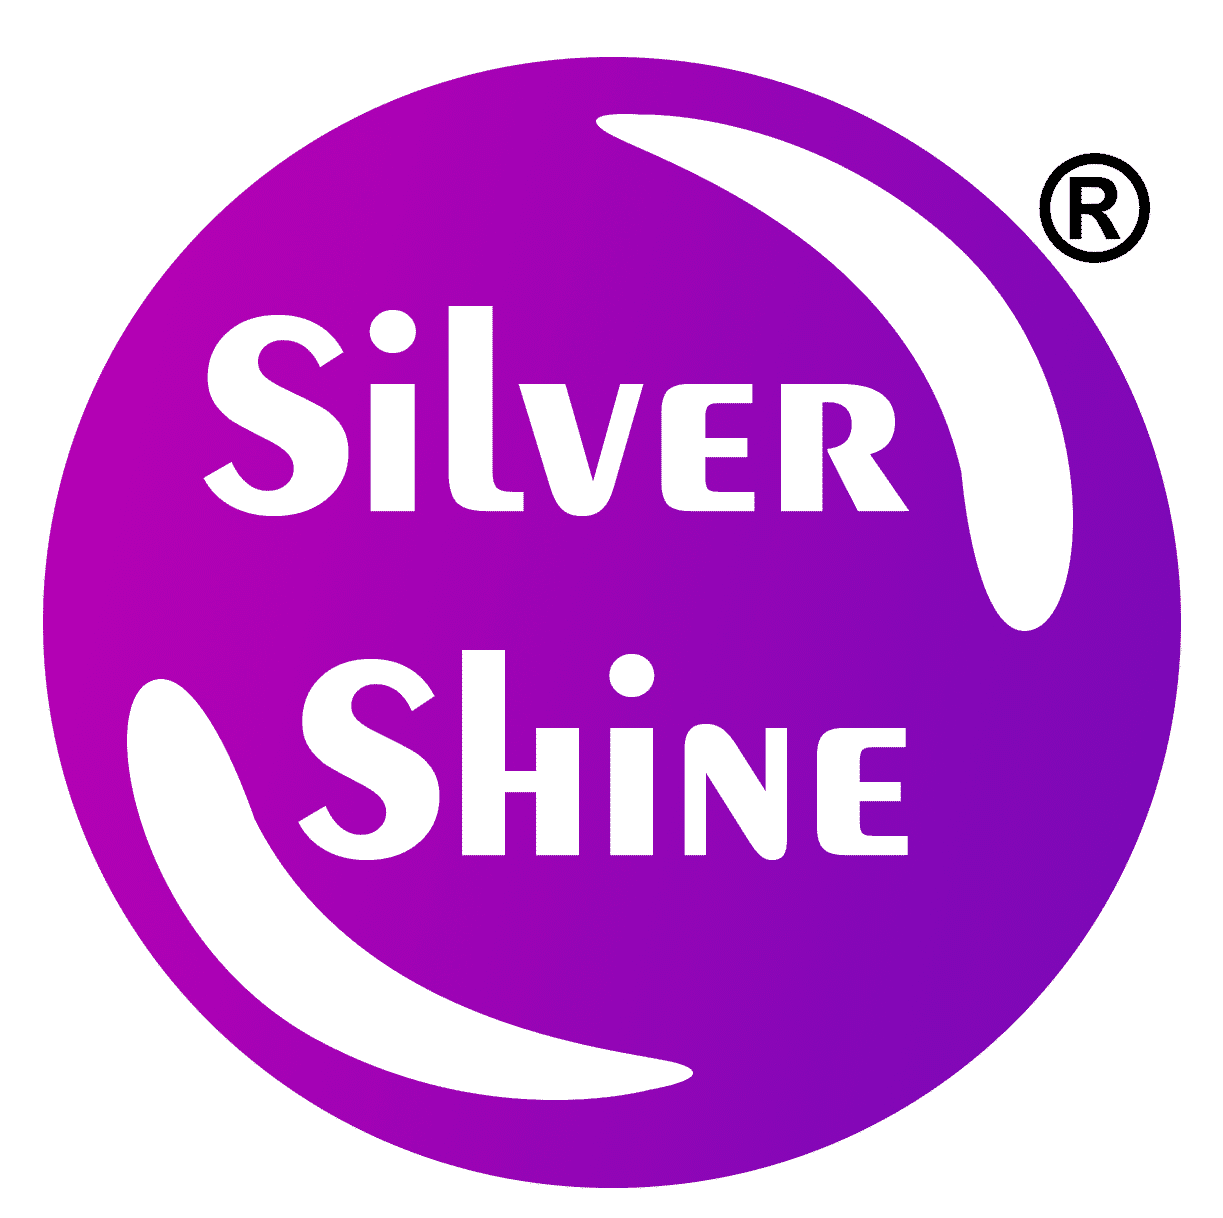 Silver Shine